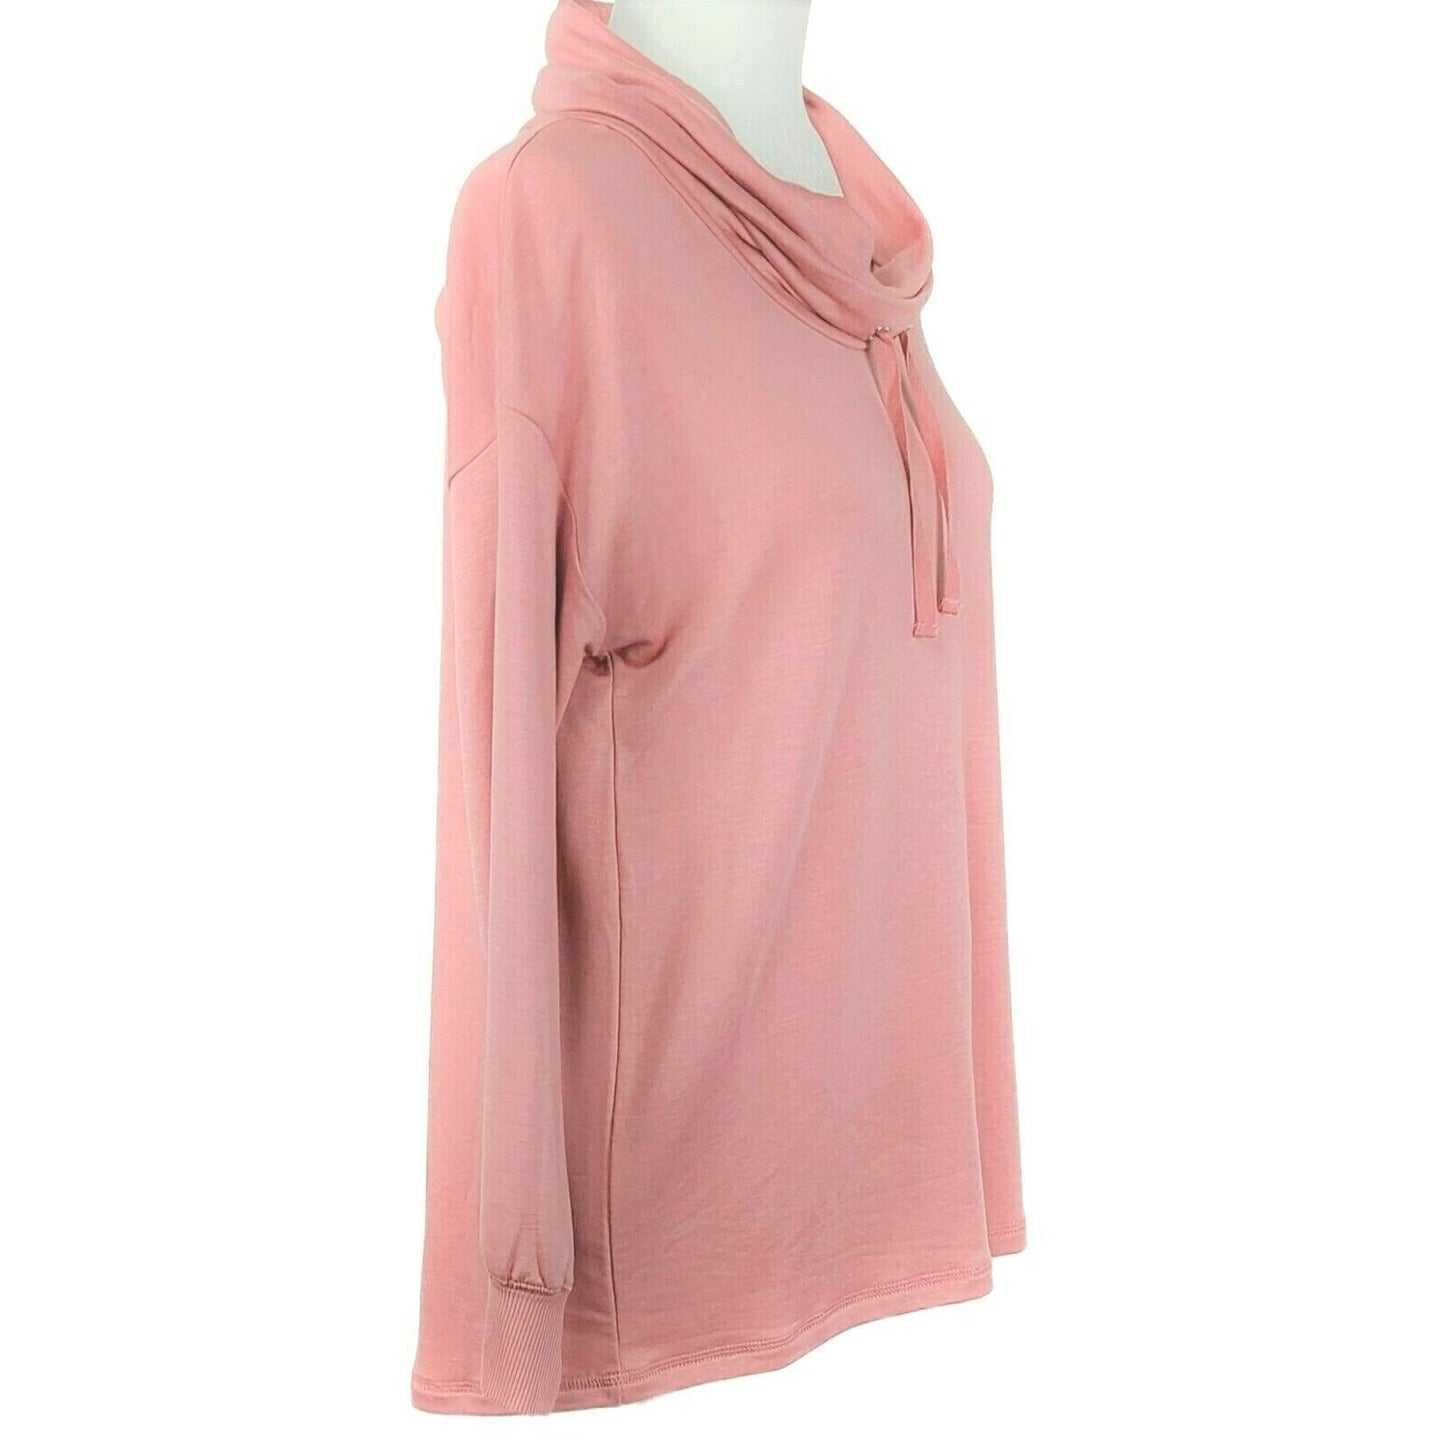 NWT Rachel Zoe Ultra Soft Cozy Cowl Neck Long Sleeve Sweatshirt Top. Size:S,M,L